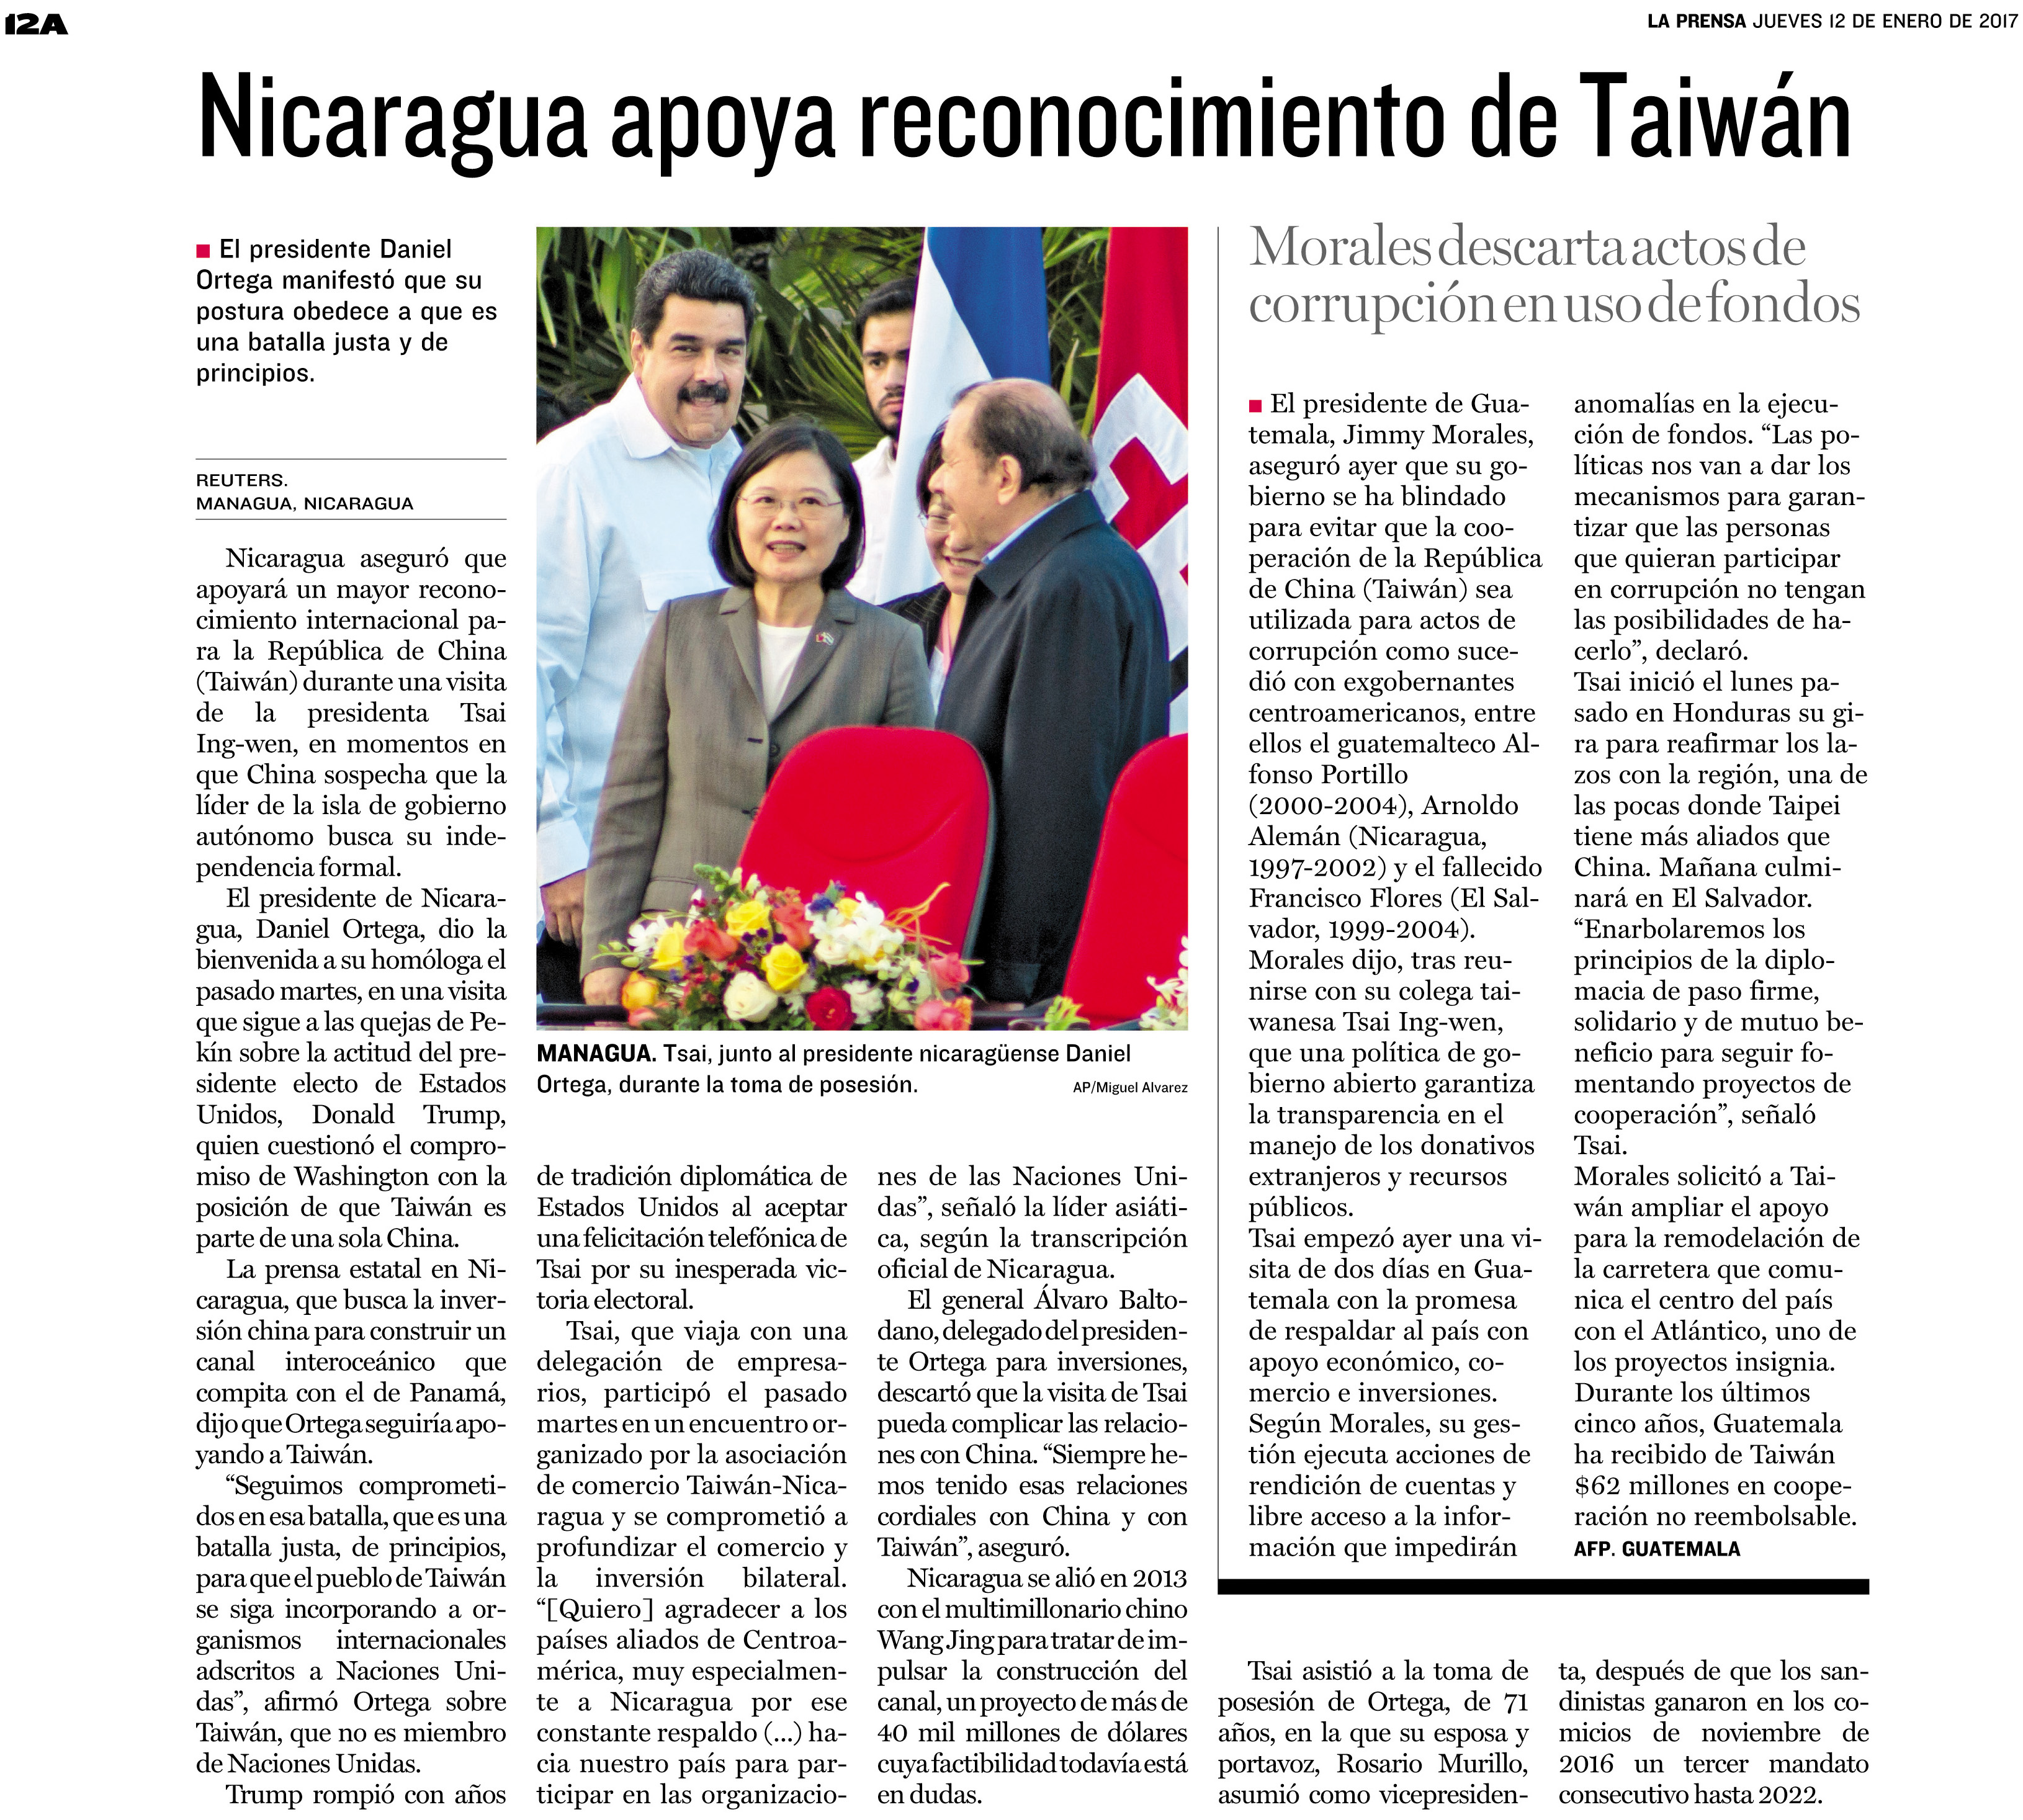 Nicaragua backs recognition for Taiwan